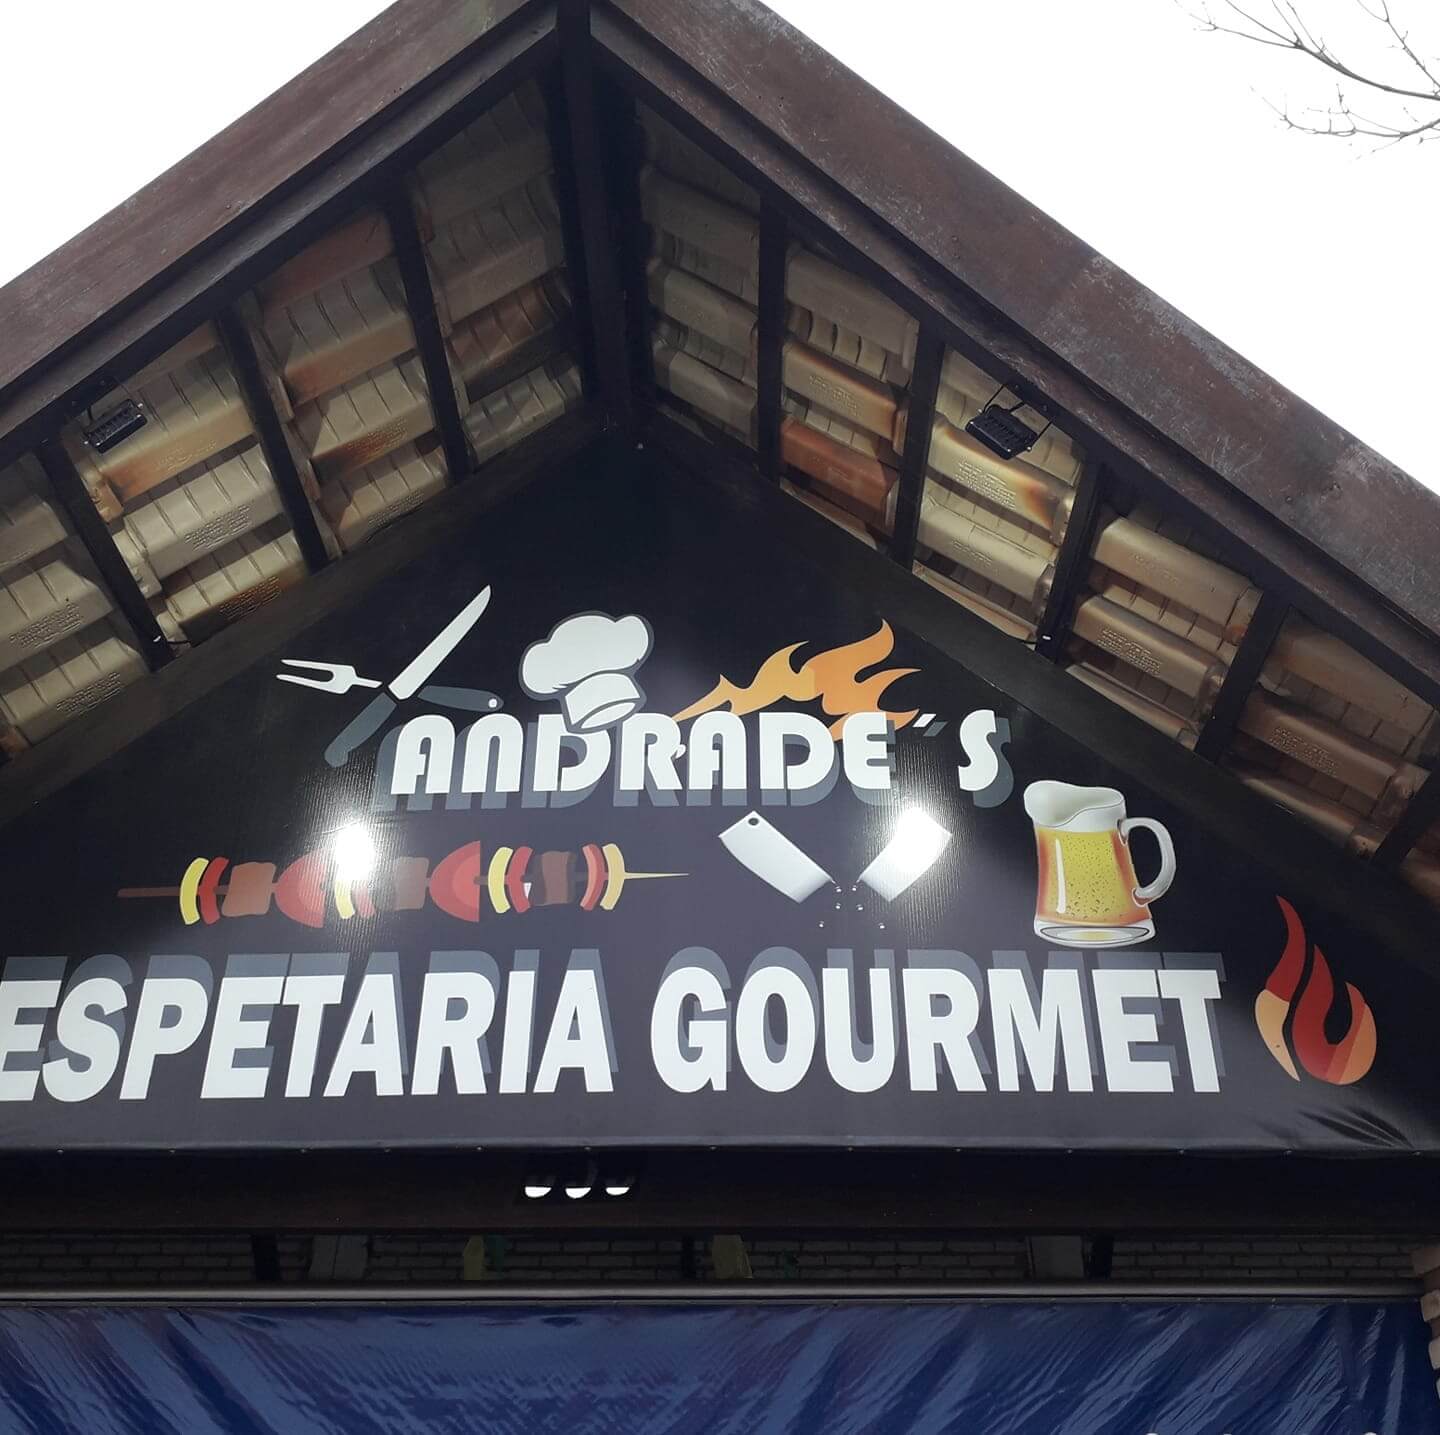 Andrade's Espetaria Gourmet